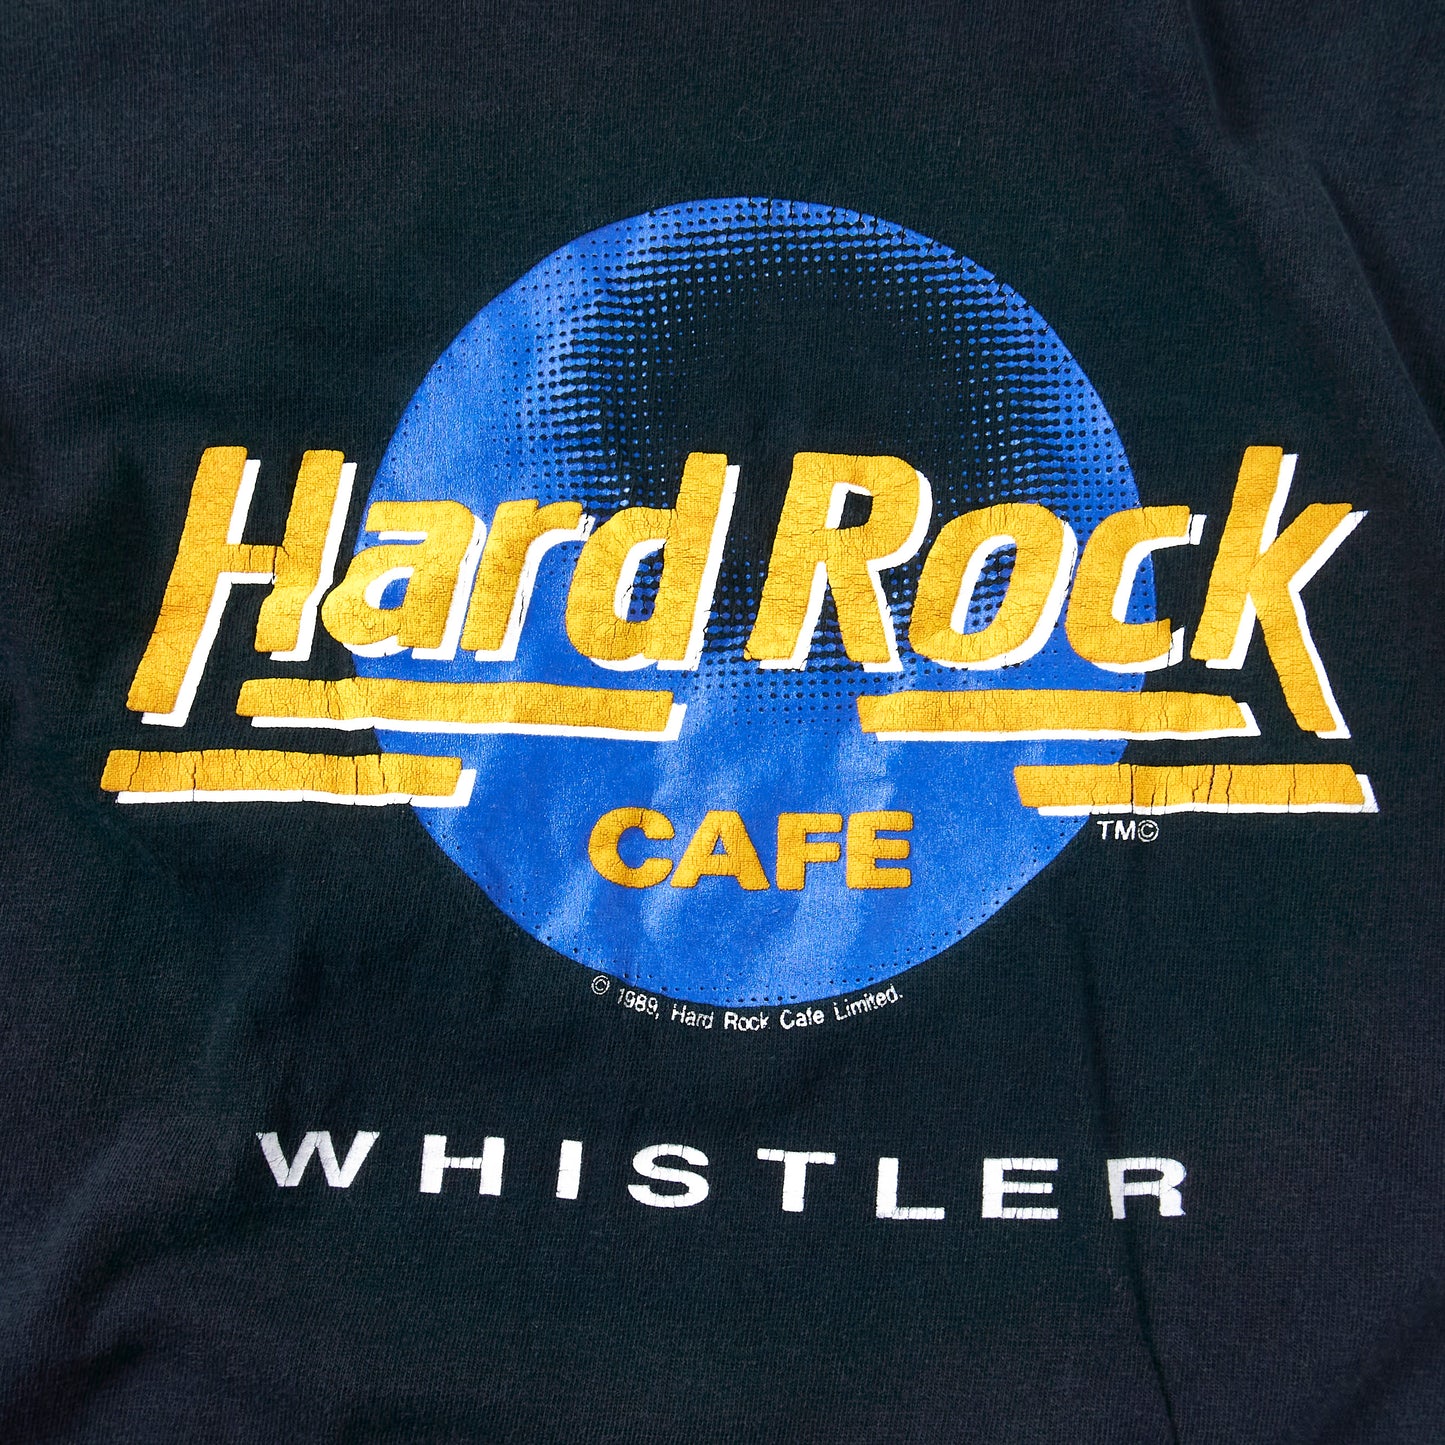 Vintage ‘Hardrock Café Whistler’ Single stitch Tee T-shirt